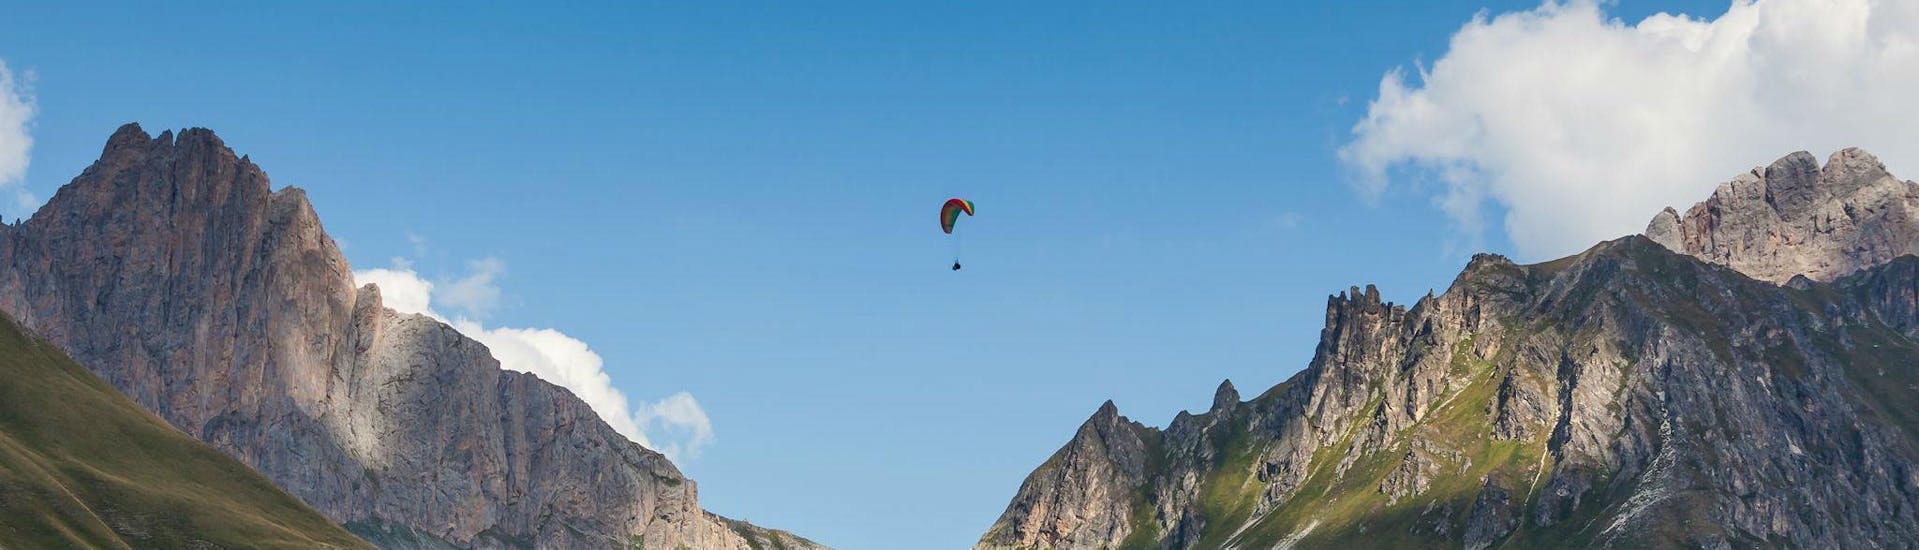 Thermik Tandem Paragliding in Serre-Chevalier - Chantemerle (ab 7 J.) - Col du Granon.